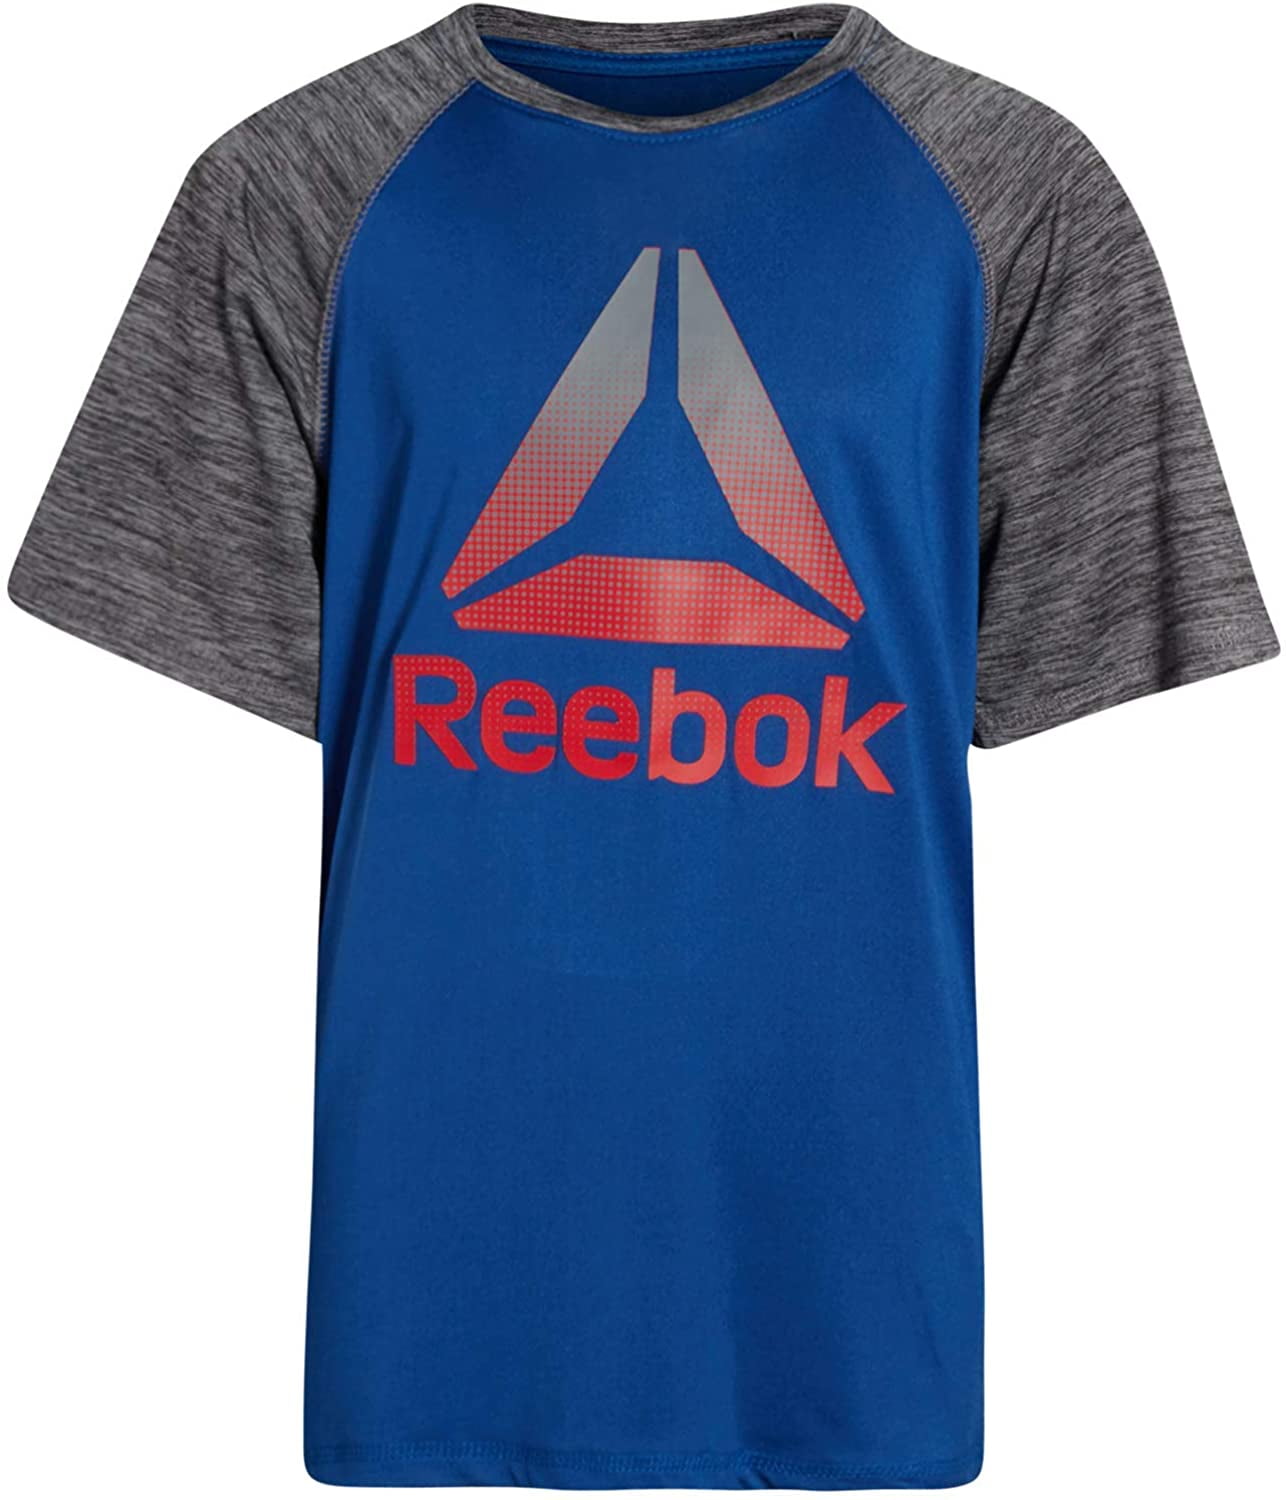 reebok dry fit t shirt